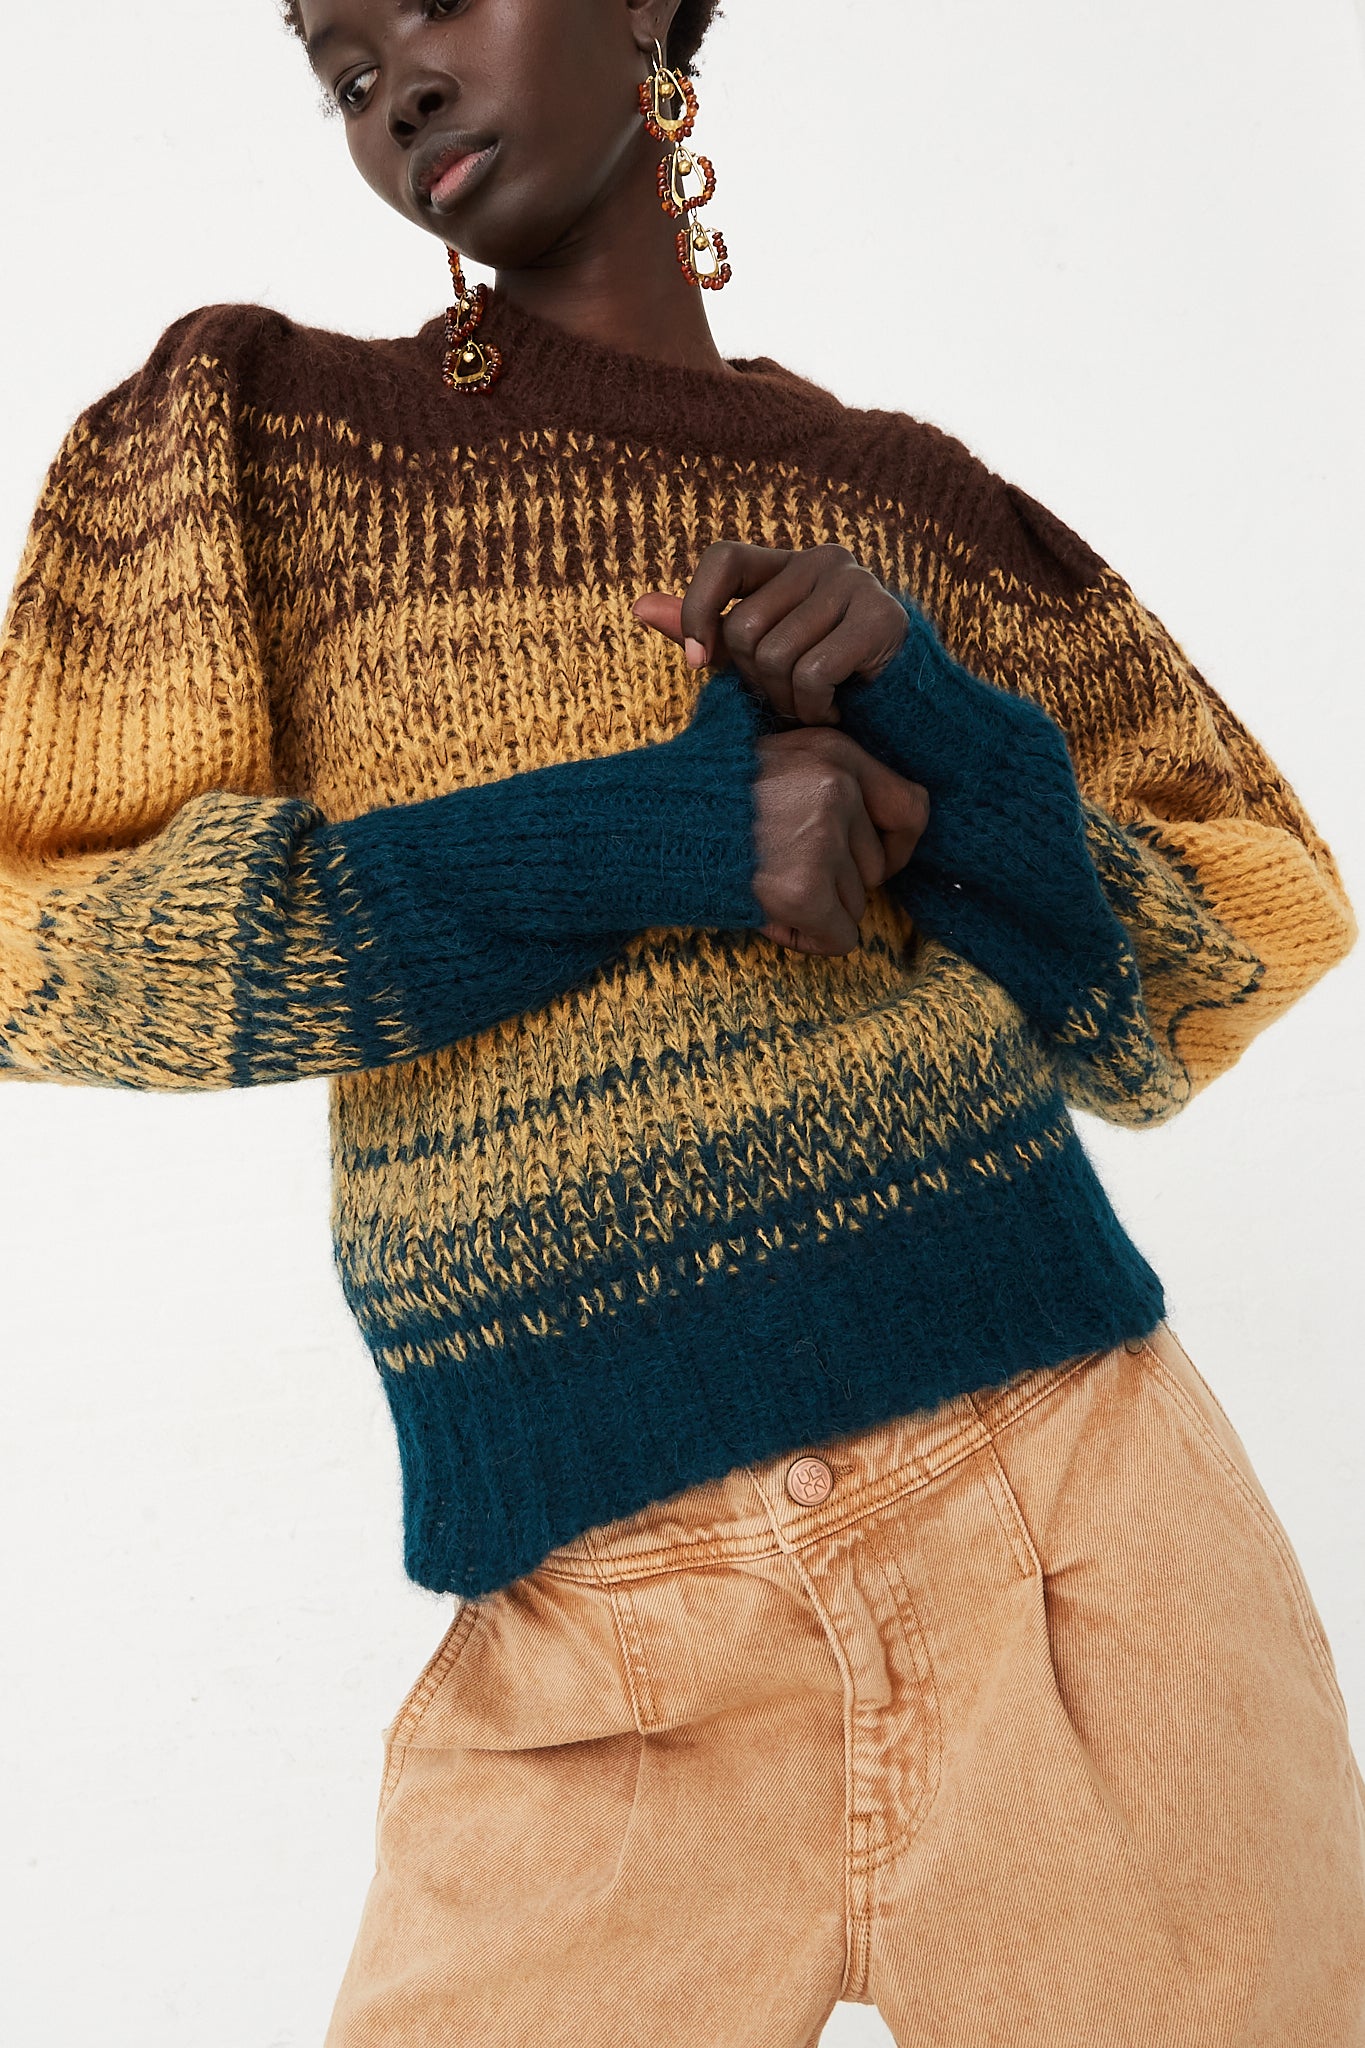 Rosalia Alpaca Knit Sweater in Desert by Ulla Johnson for Oroboro Front Upclose